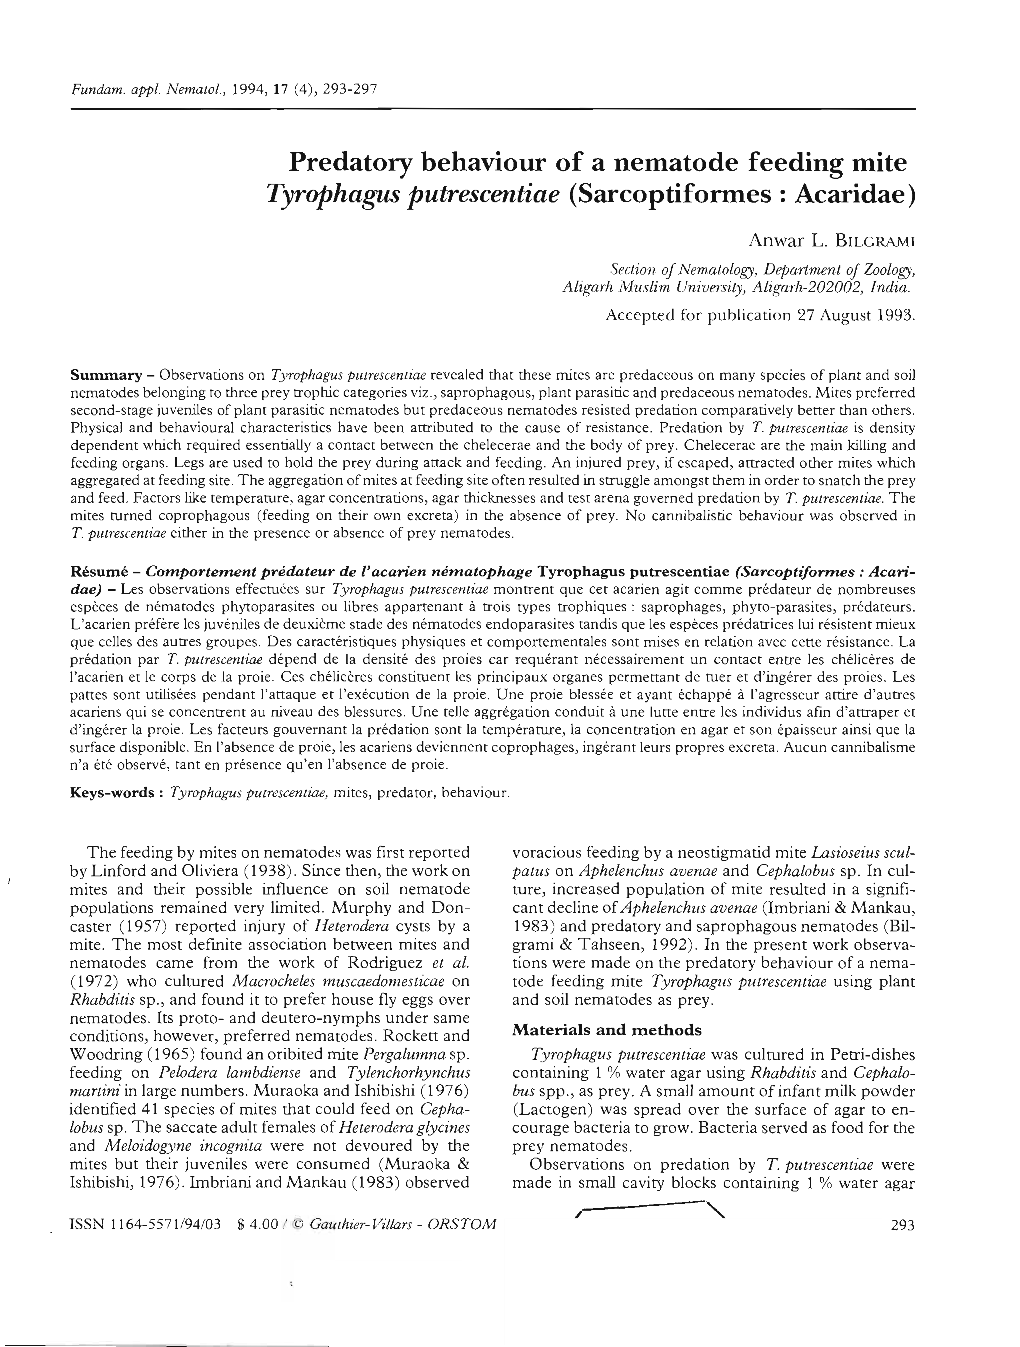 Predatory Behaviour of a Nematode Feeding Mite Tyrophagus Putrescentiae (Sarcoptiformes : Acaridae)